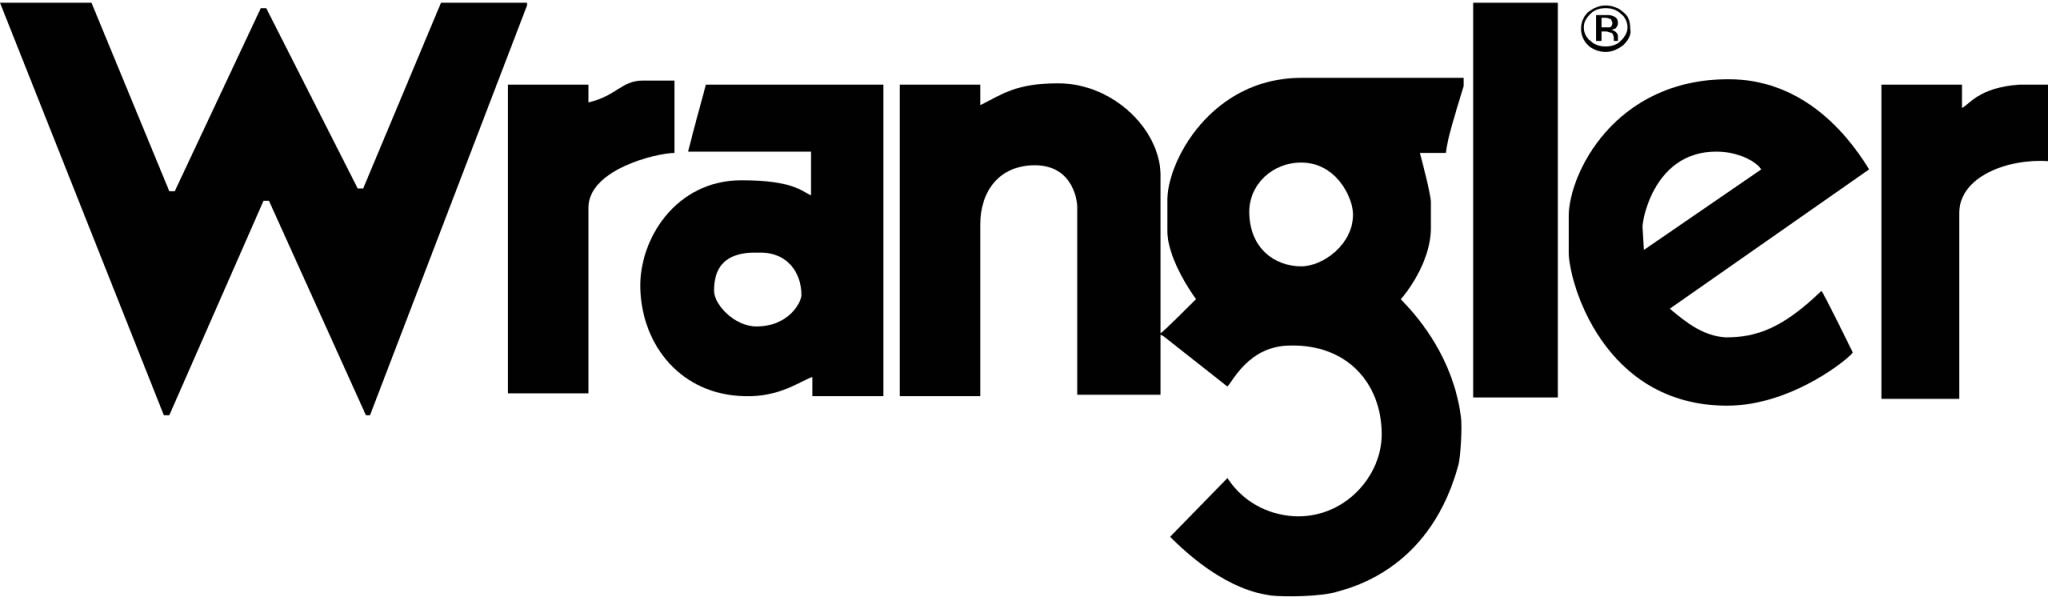 Wrangler logo png transparent